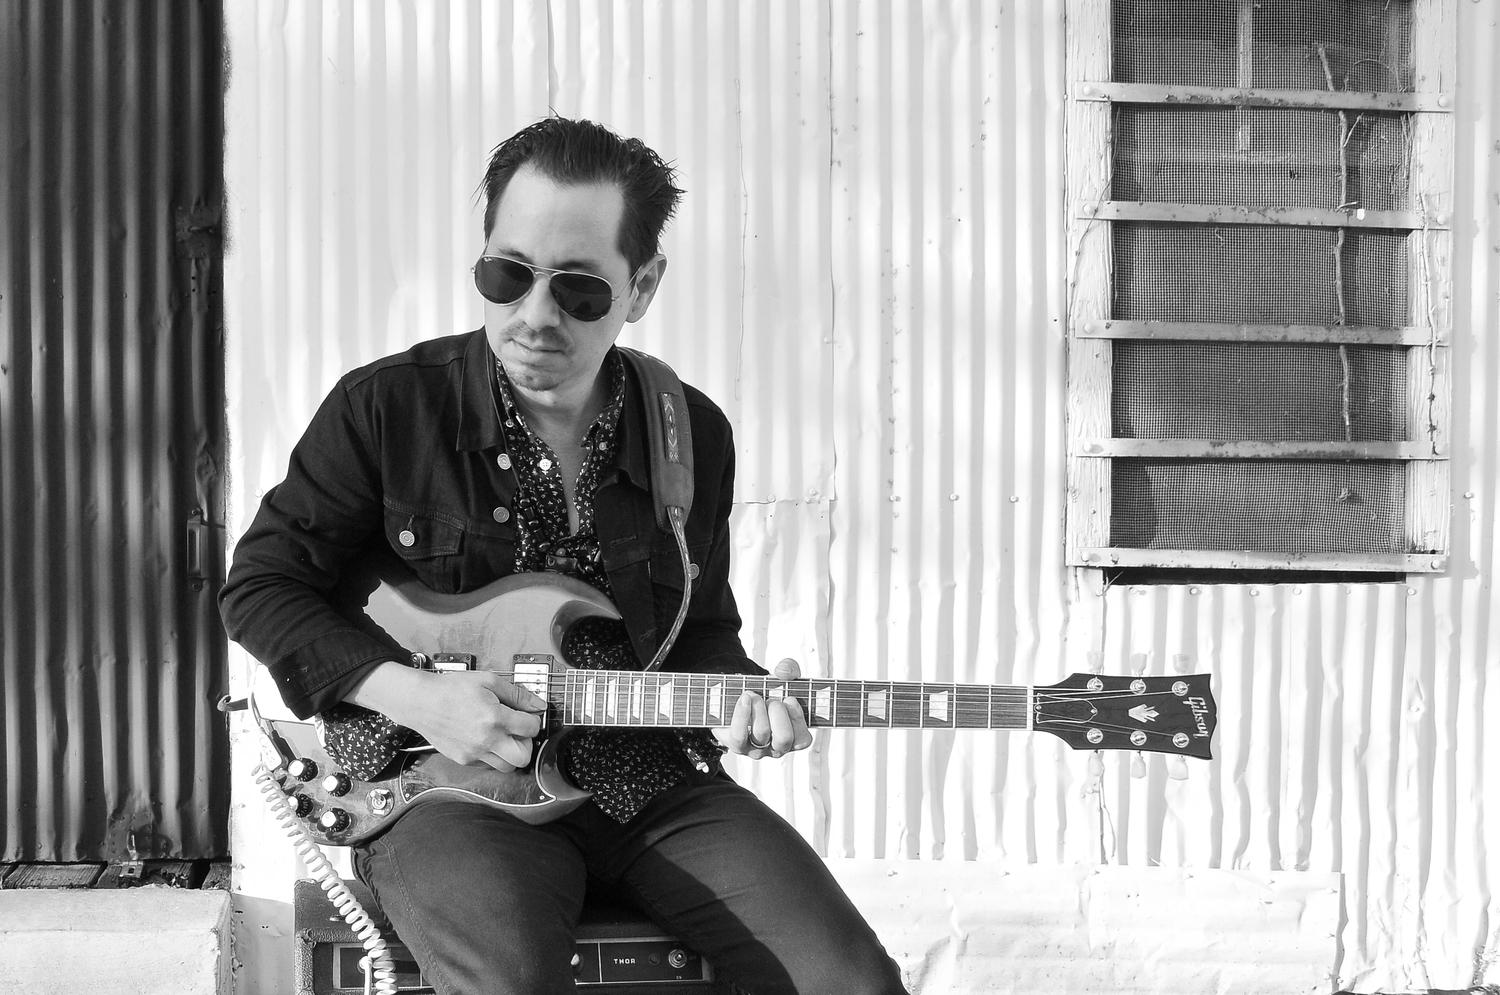 Musician Adrian Quesada grew up on the bordertown of Laredo, Texas